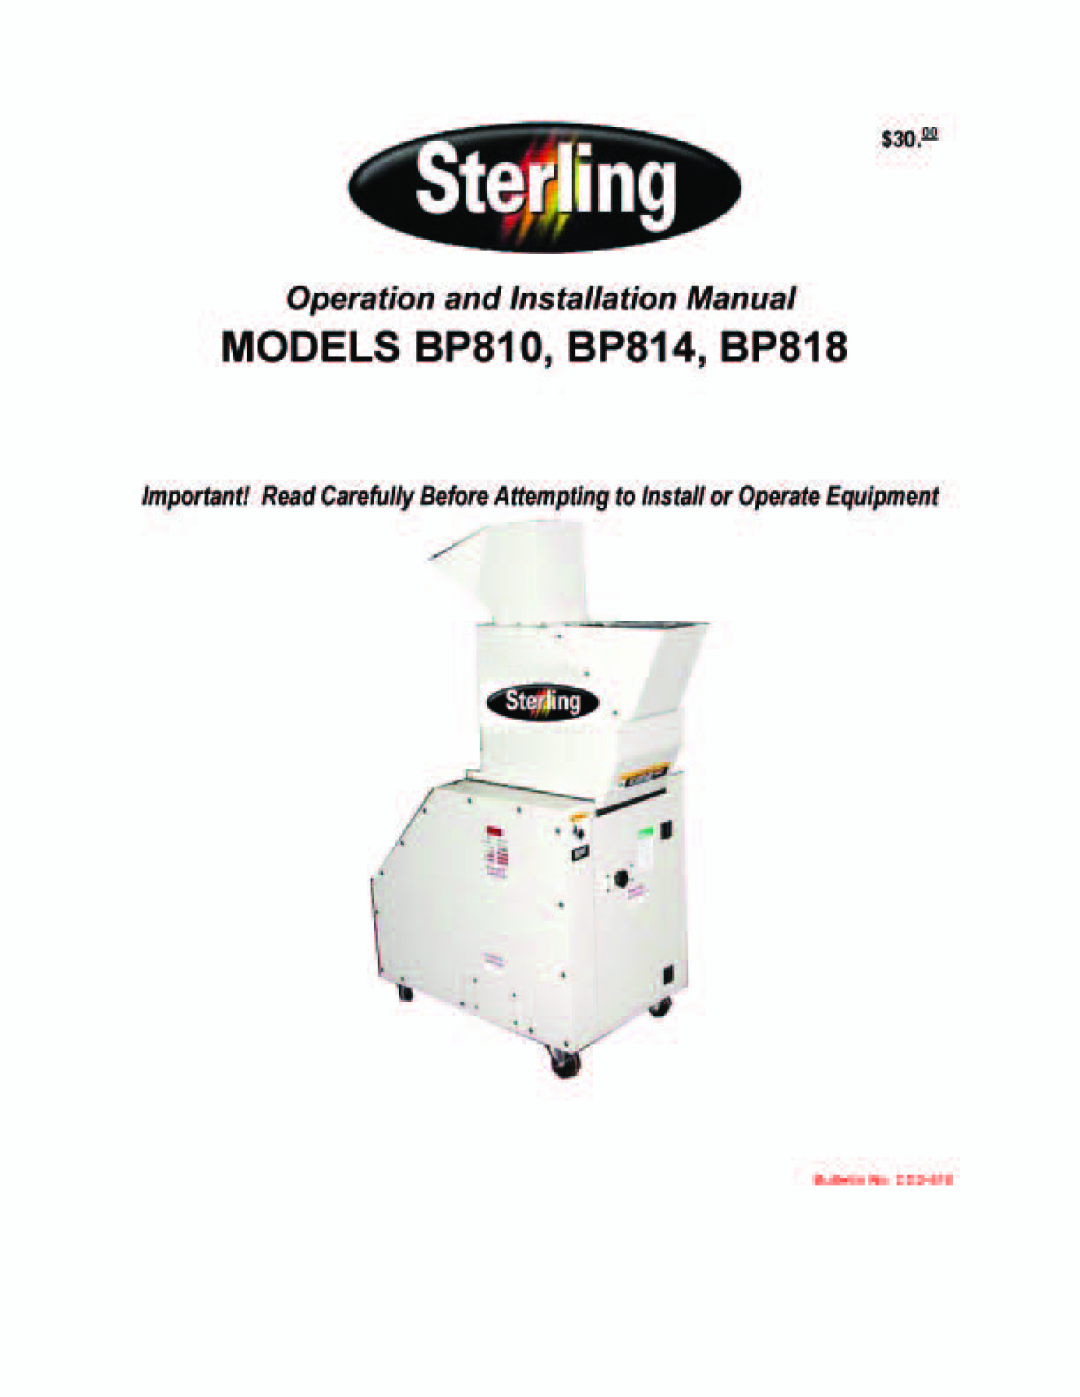 Sterling BP818, BP814, BP810 manual 